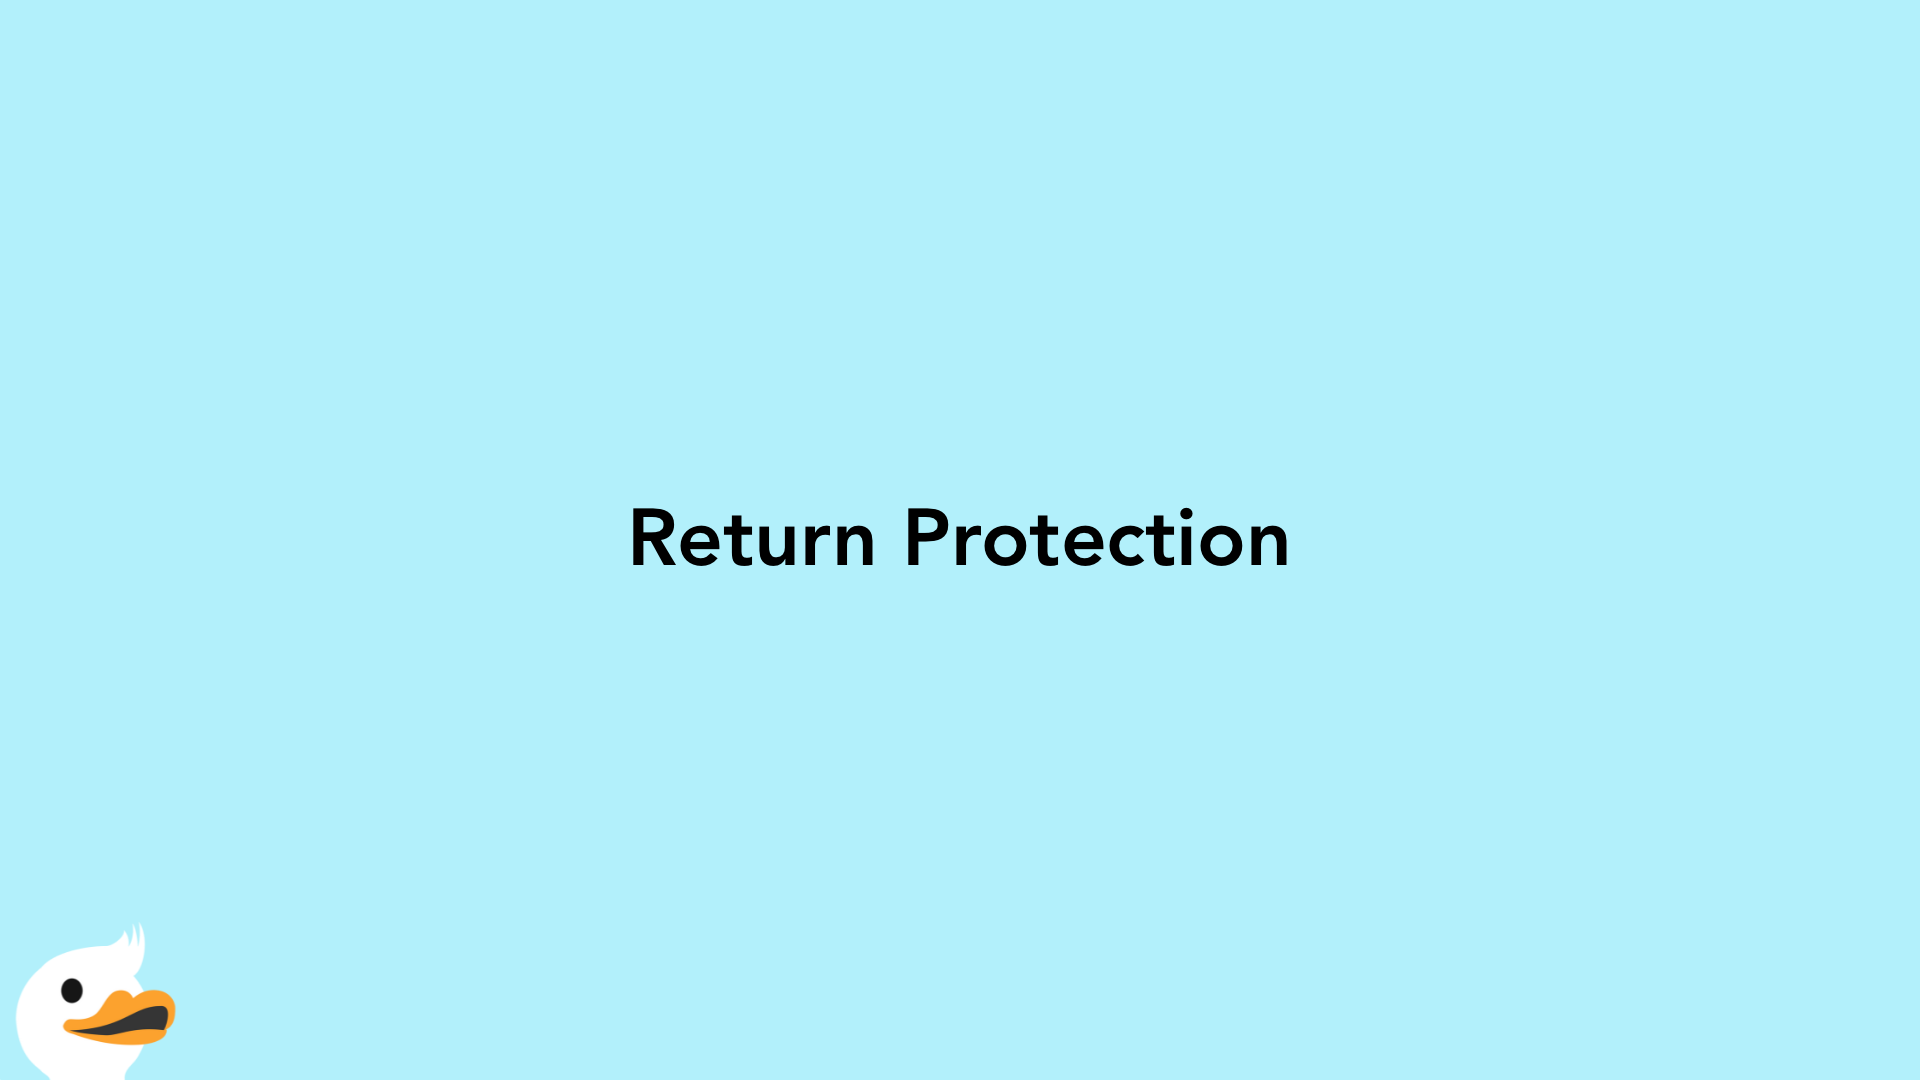 Return Protection